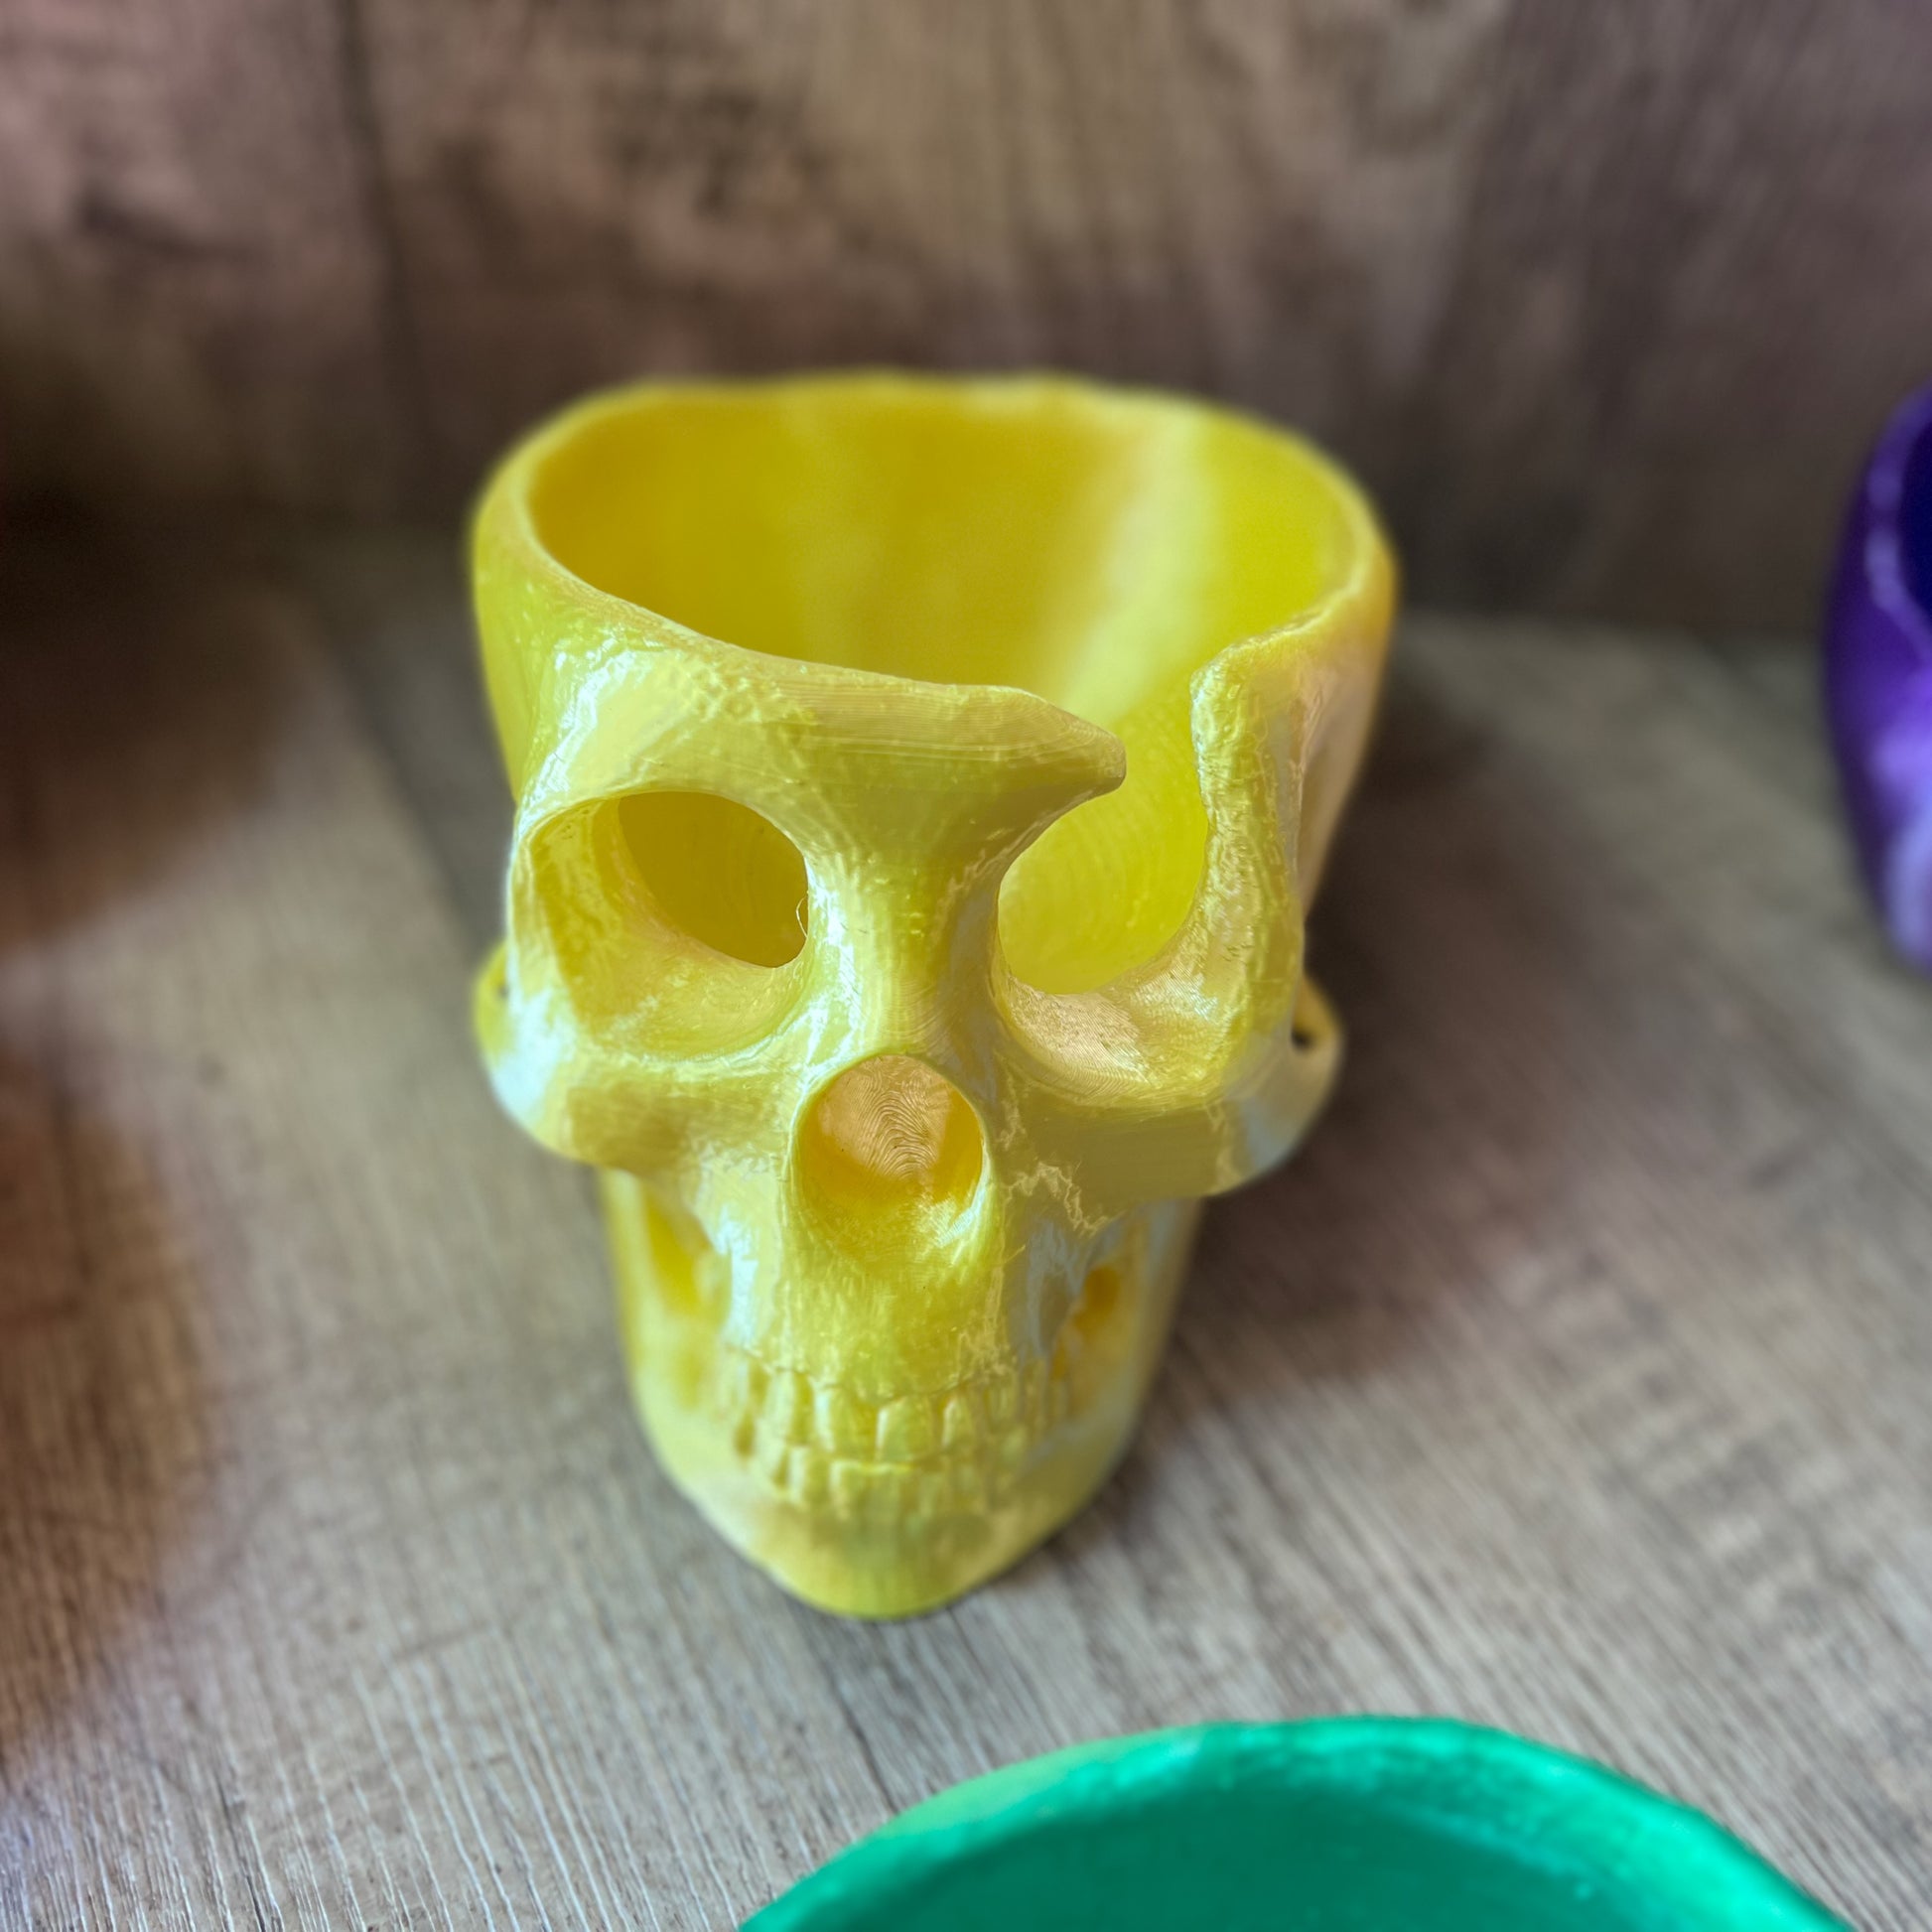 Skull Yarn Bowl, 3D Printed, Yarn - Knitting, Crochet Accessories